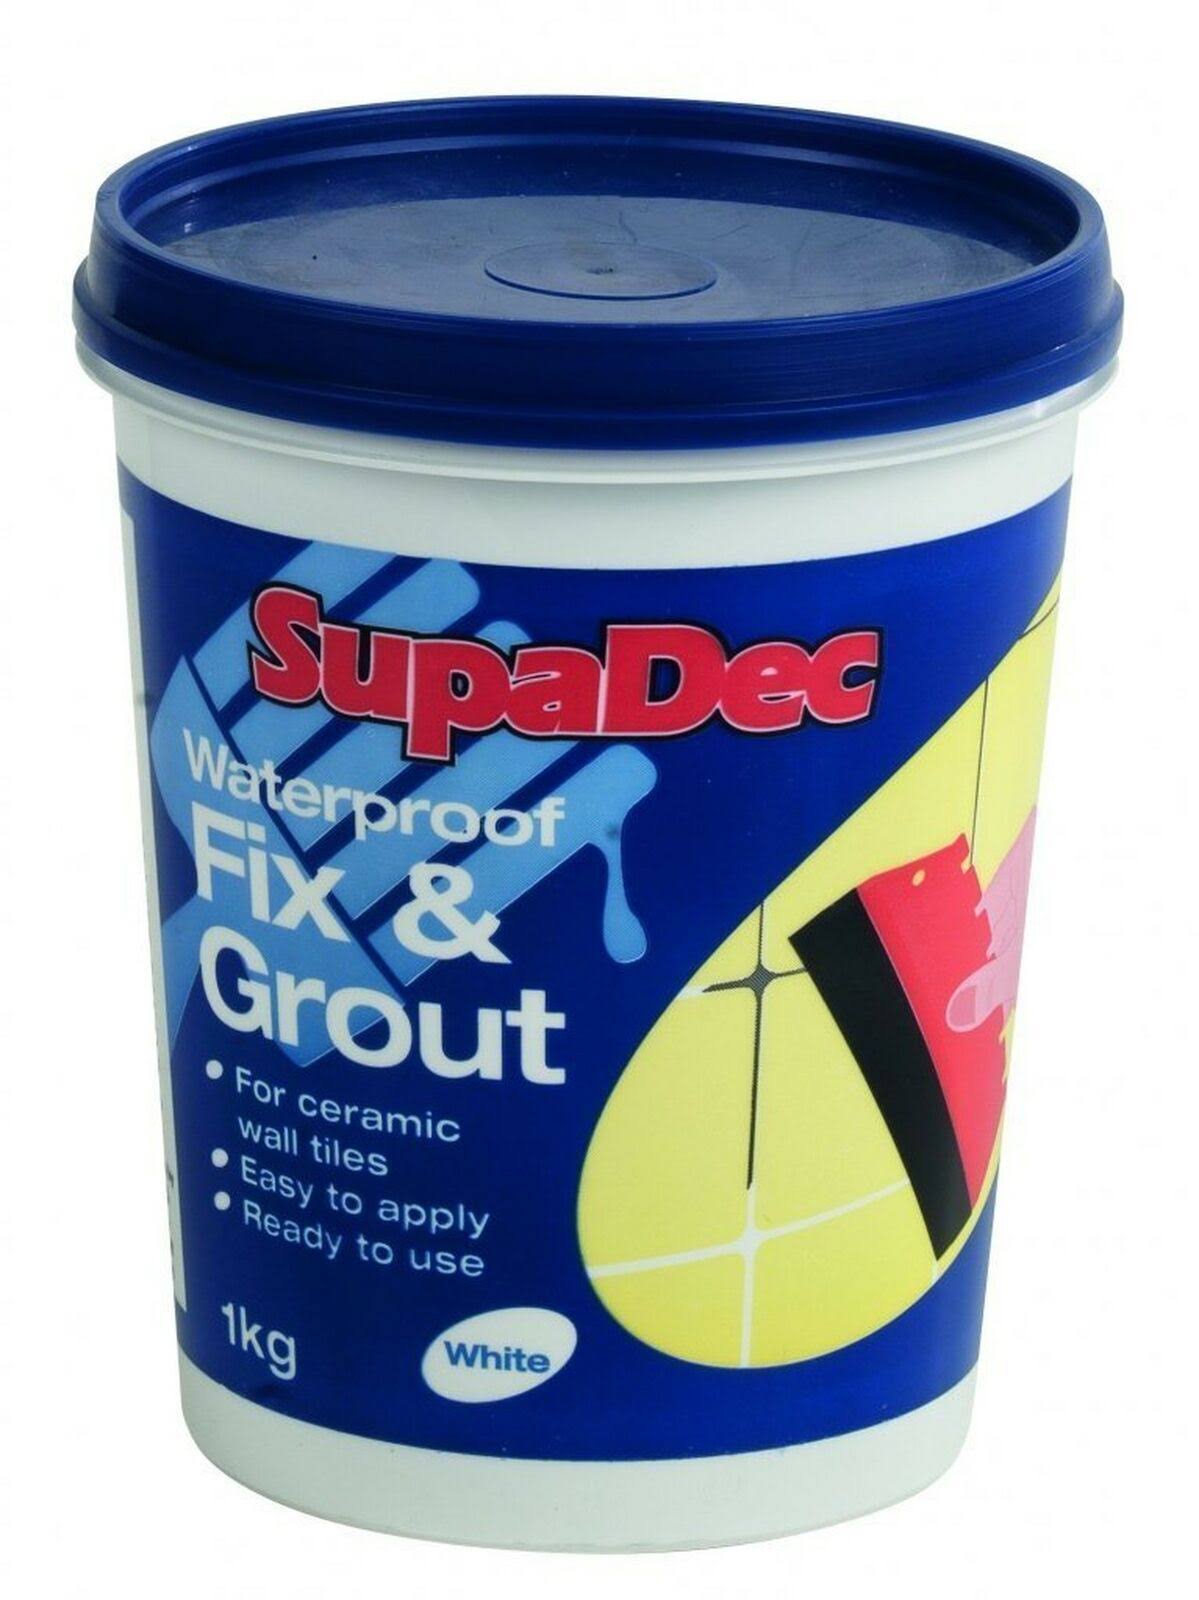 Supadec Waterproof Fix & Grout - 1kg